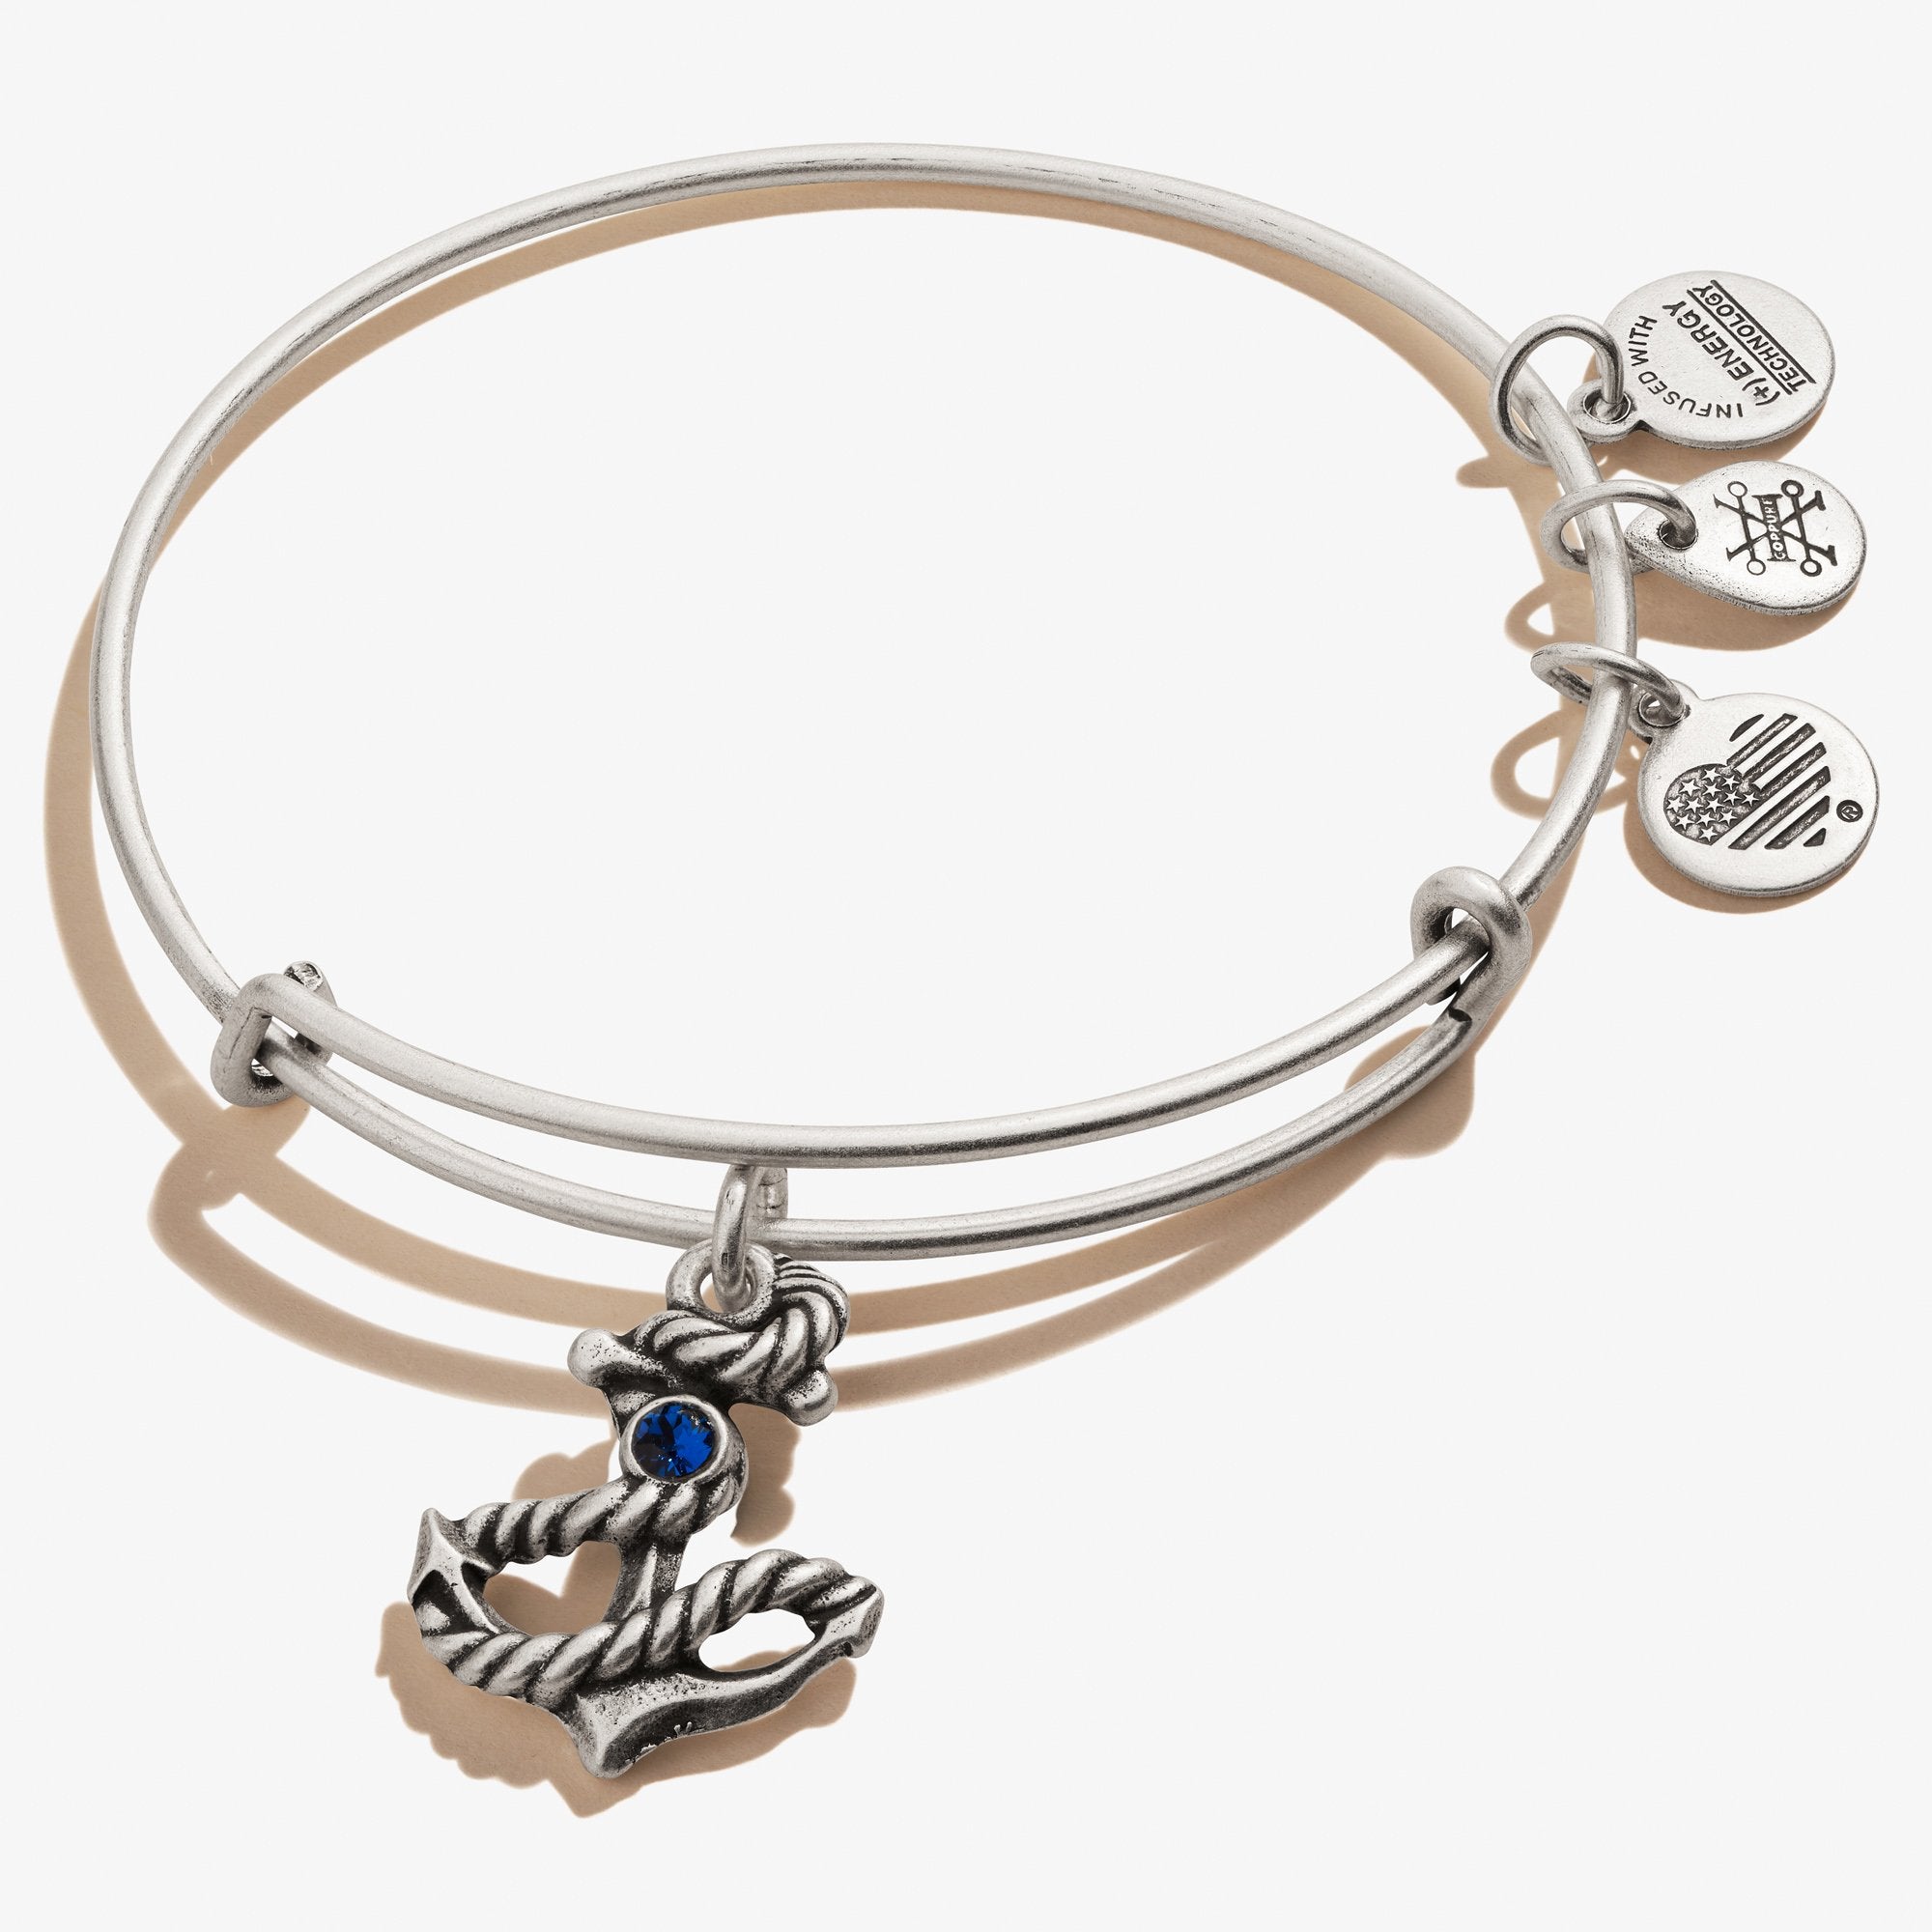 ALEX & ANI Anchor Charm Bracelet Bangle Energy | Bangle bracelets, Charm  bracelet, Anchor bracelet